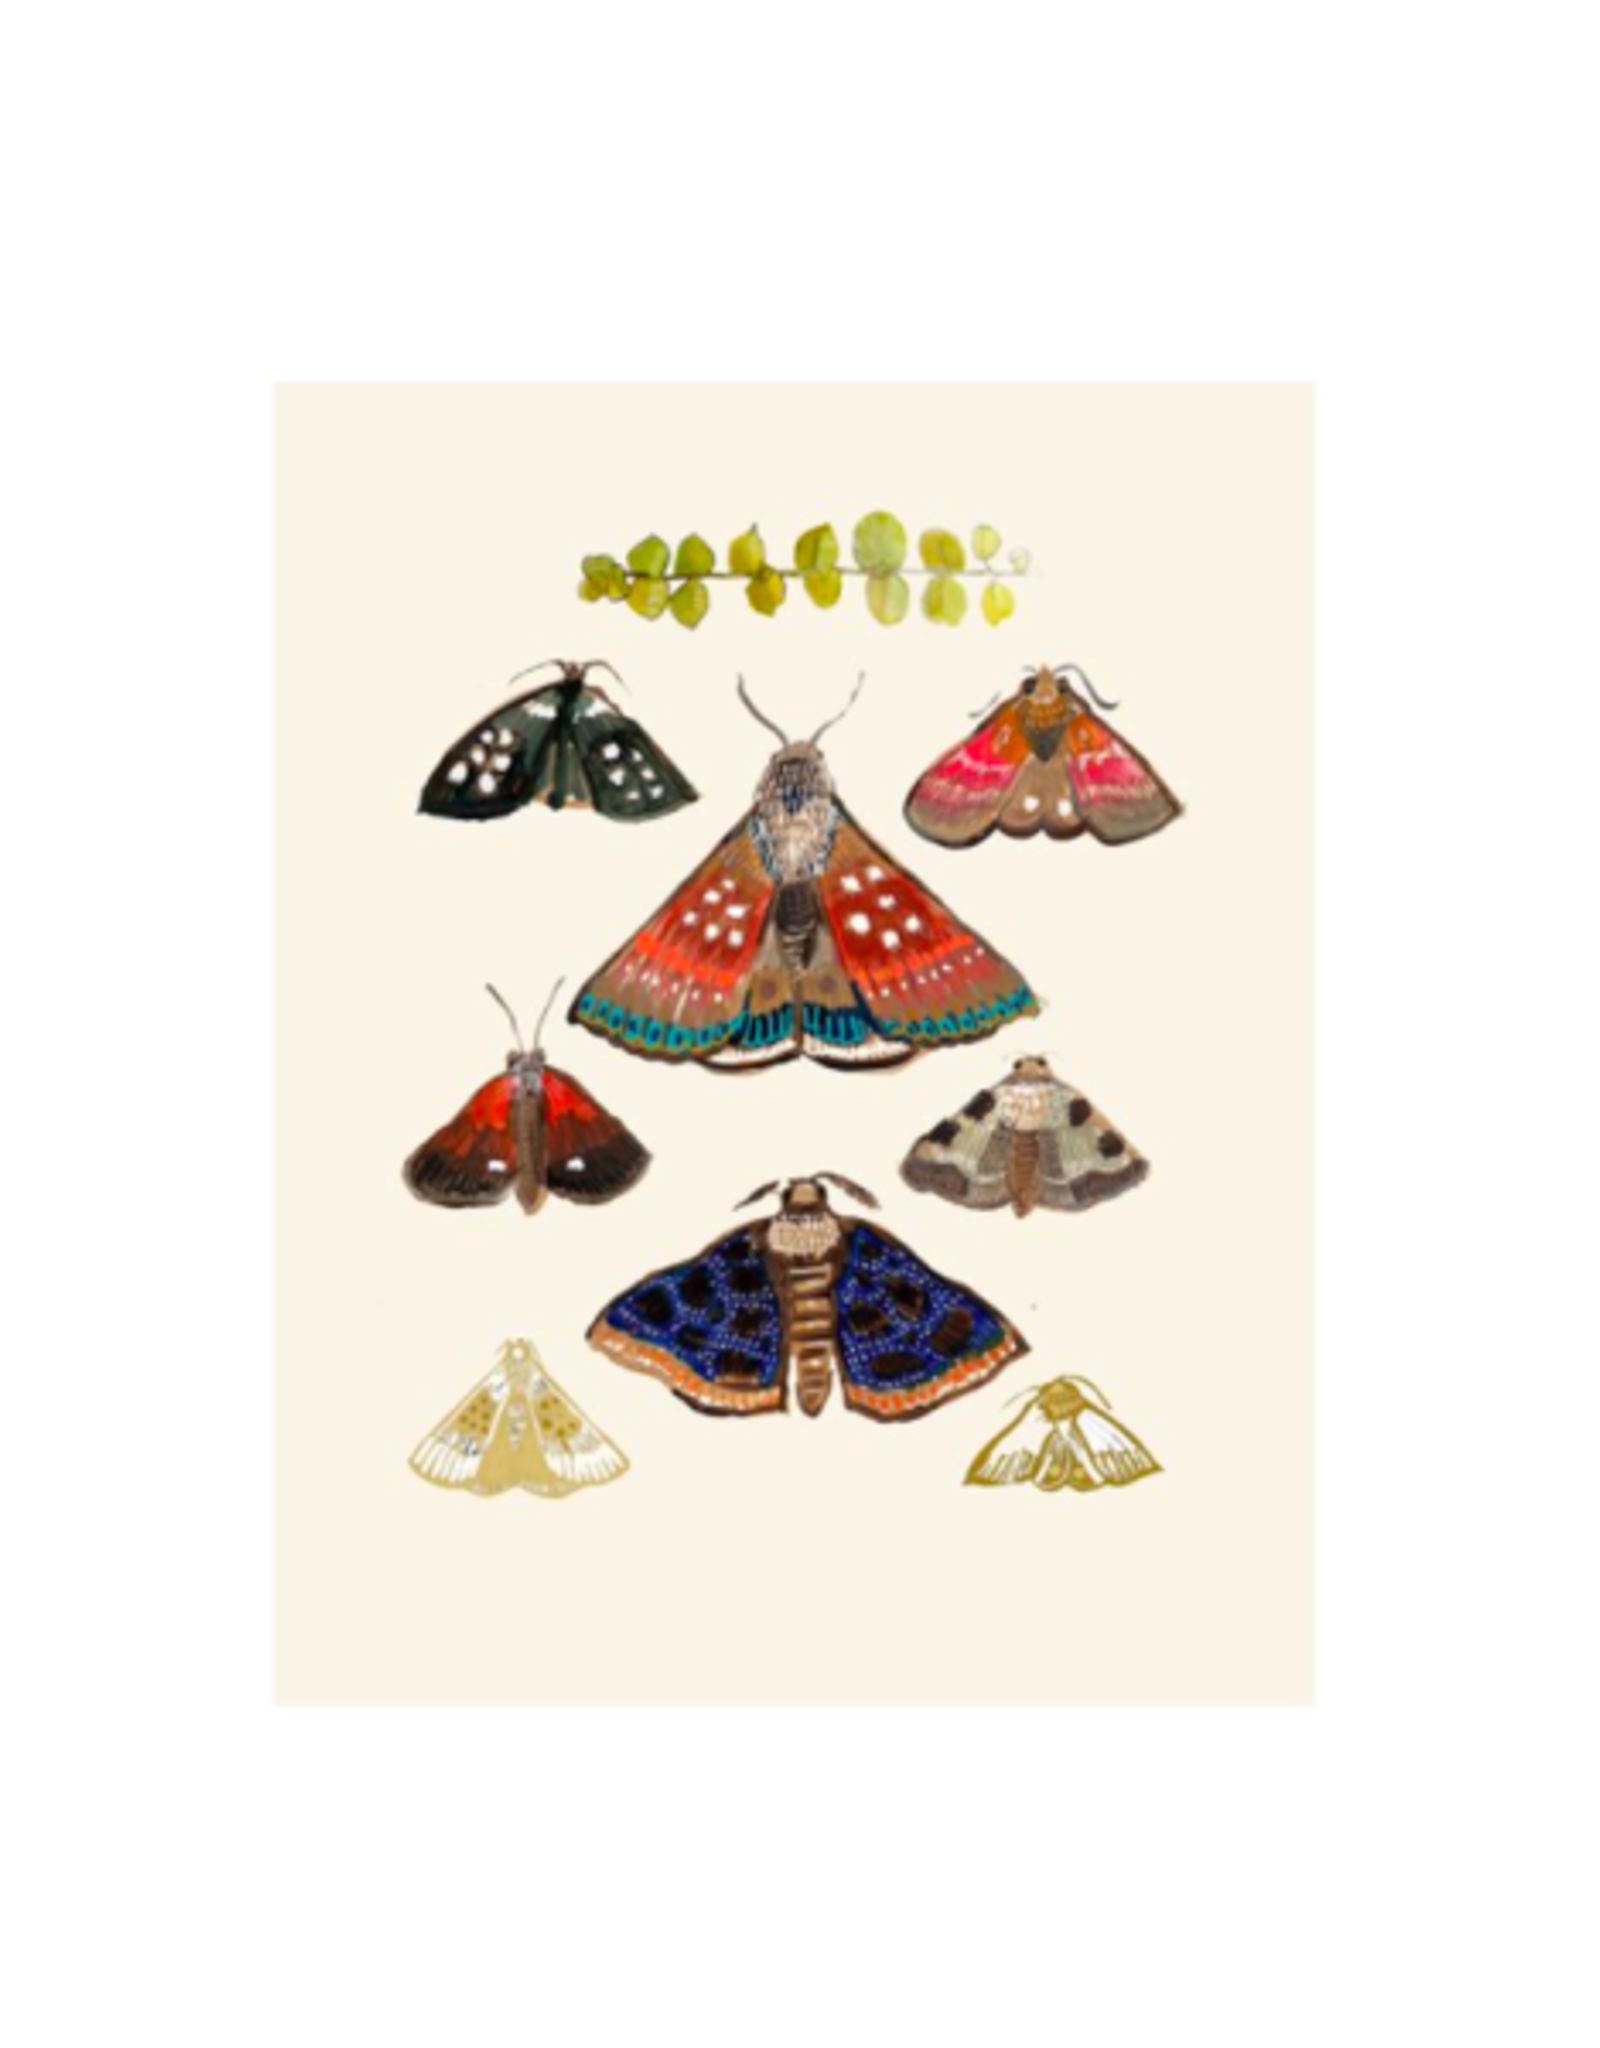 Briana Corr Scott - Print / Moths, Cream, 11 x 14"